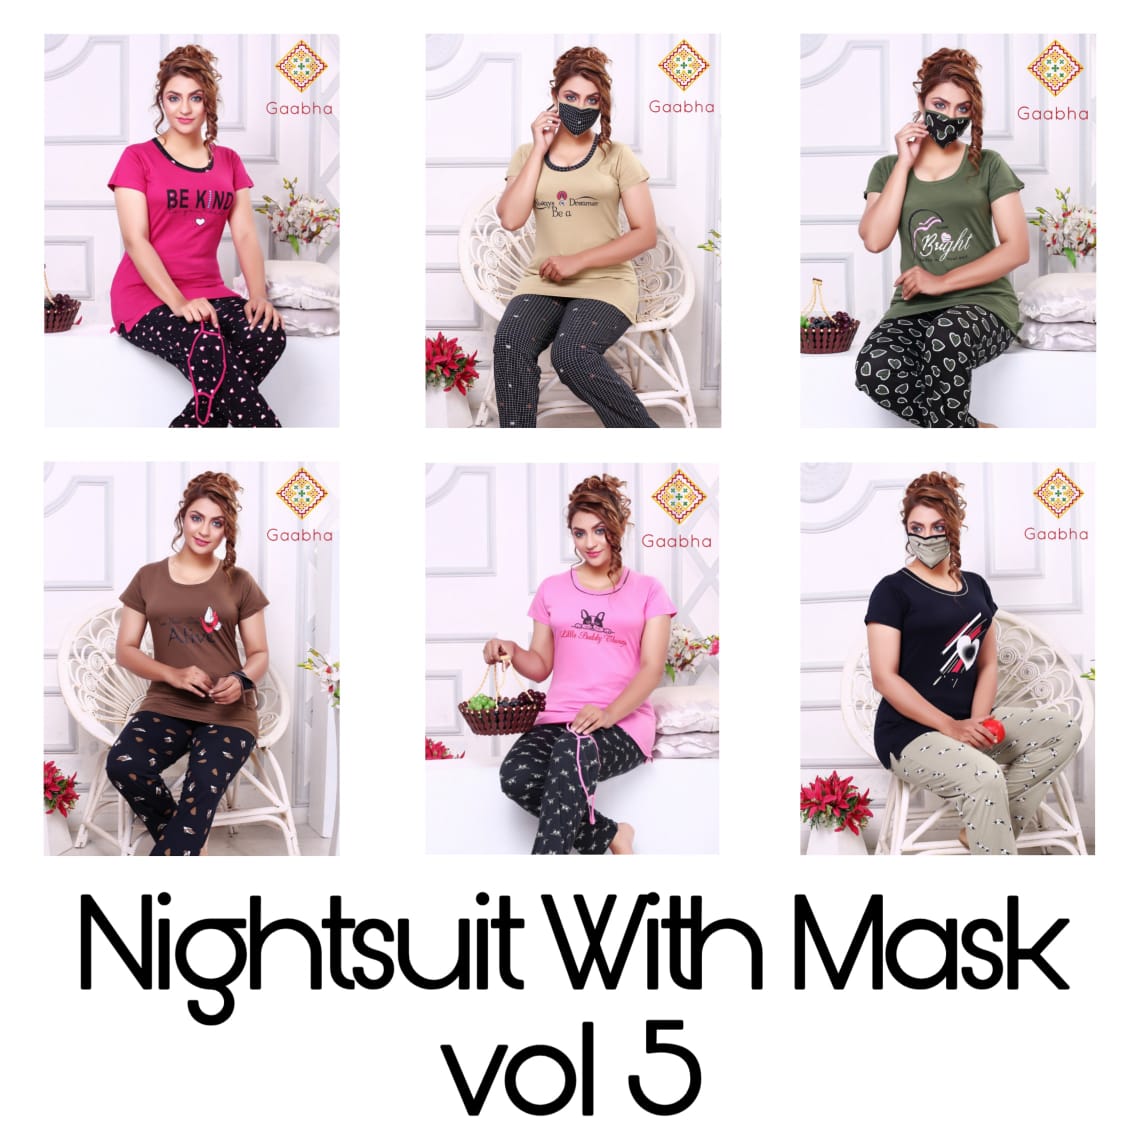 Gaabha nightsuit with mask vol 5 comfortable night dress catalog